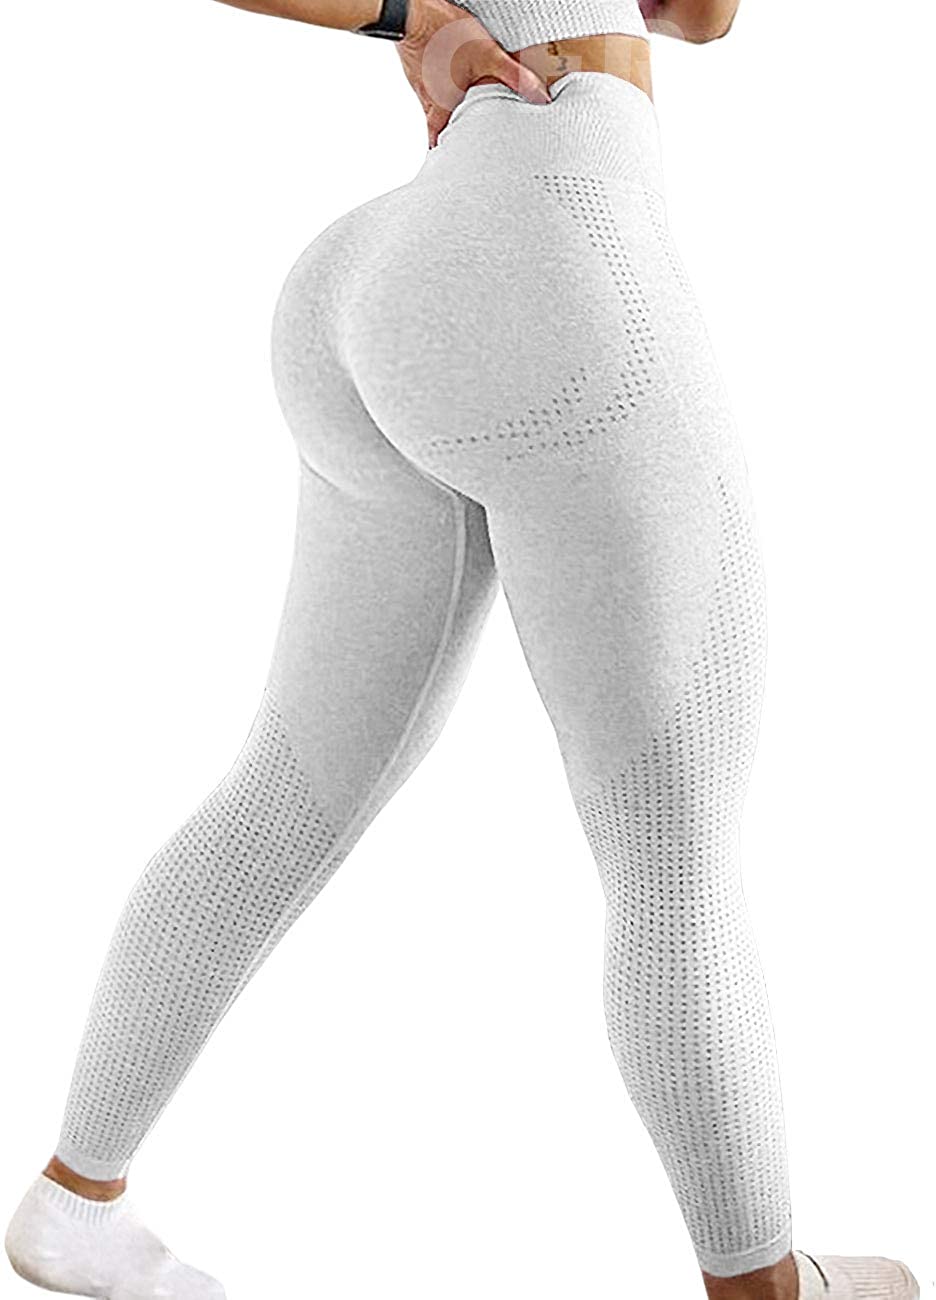  CFR Women Plus Size Athletic Biker Shorts Scrunch Butt  Lifting Peach Booty High Waist Workout Leggings Sport Gym Fitness Bottoms  Hot Pants B1-Black